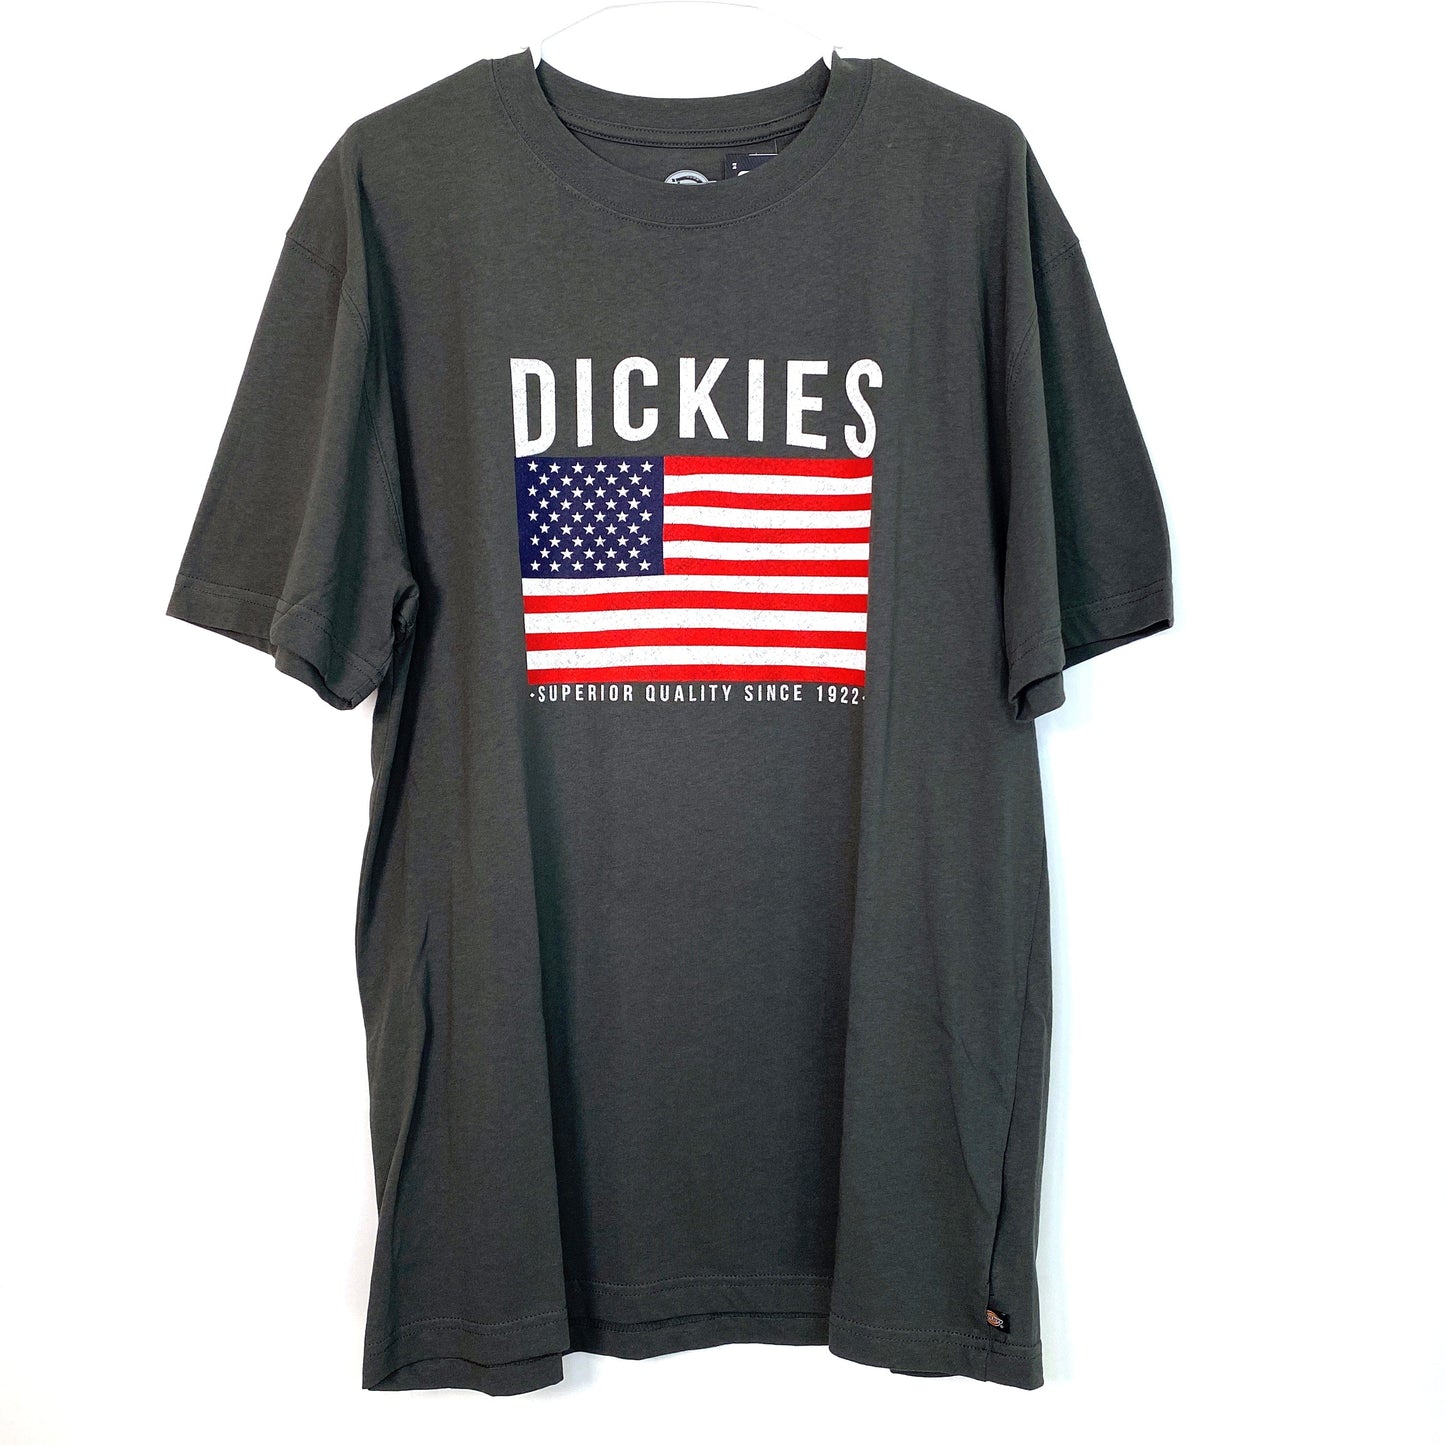 American Flag Dickies Men's Gray T-Shirt - Patriotic Design - Comfortable and Stylish